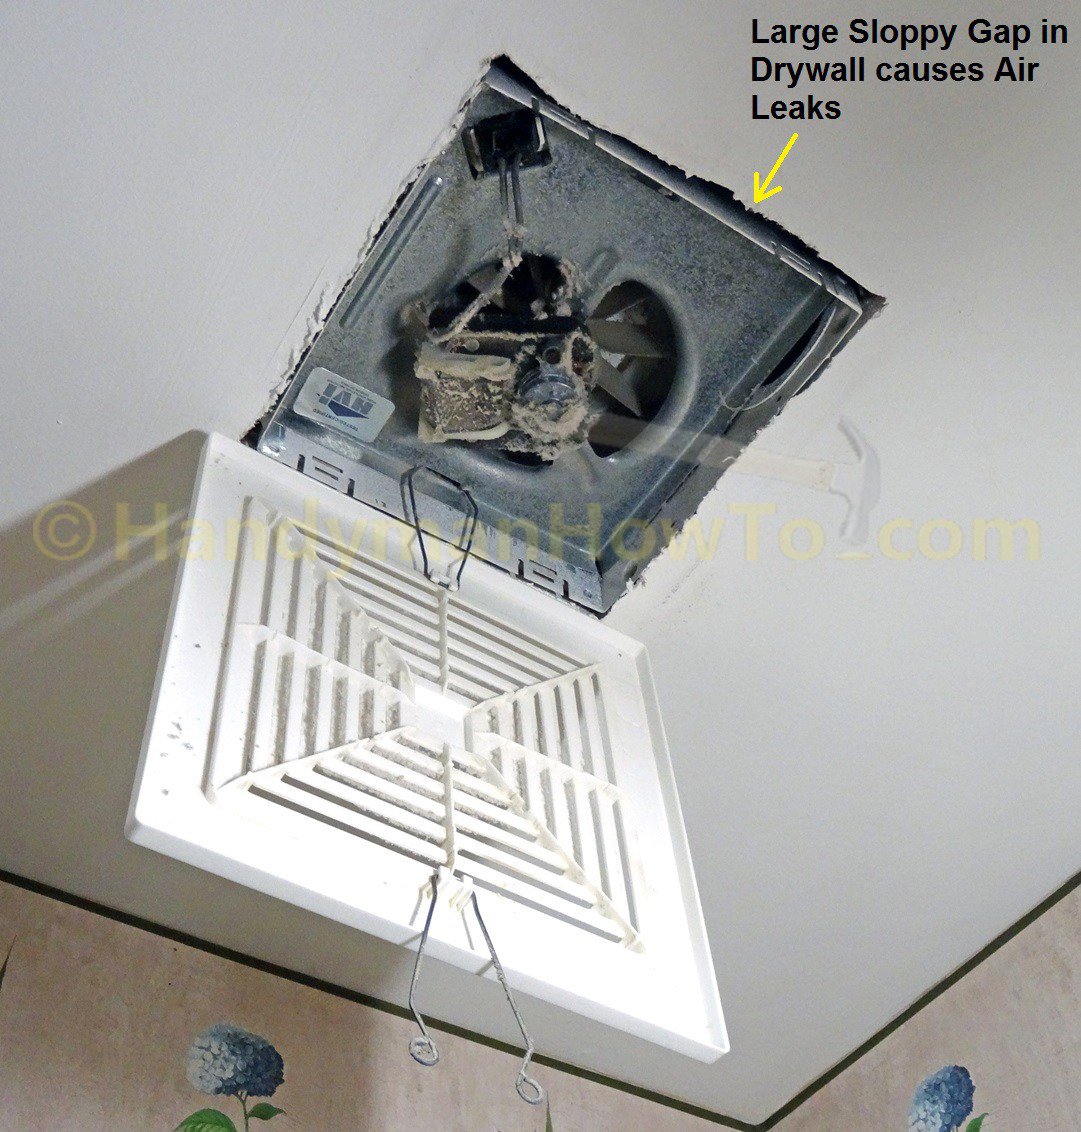 How do you install an exhaust fan through a bathroom roof?